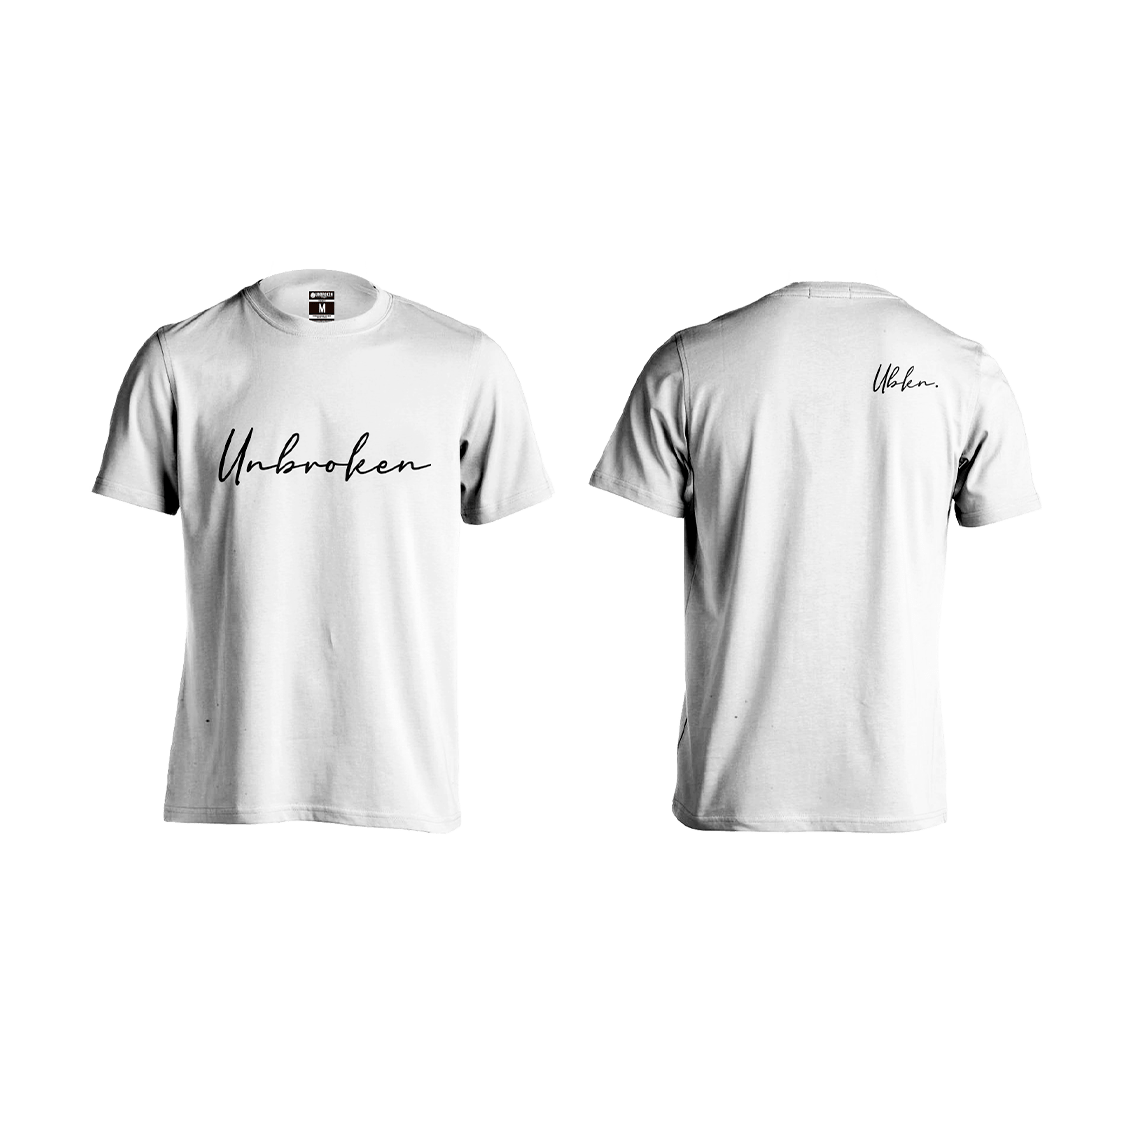 Camiseta Hombre Unbroken Signature white - Unbroken Sports Wear 